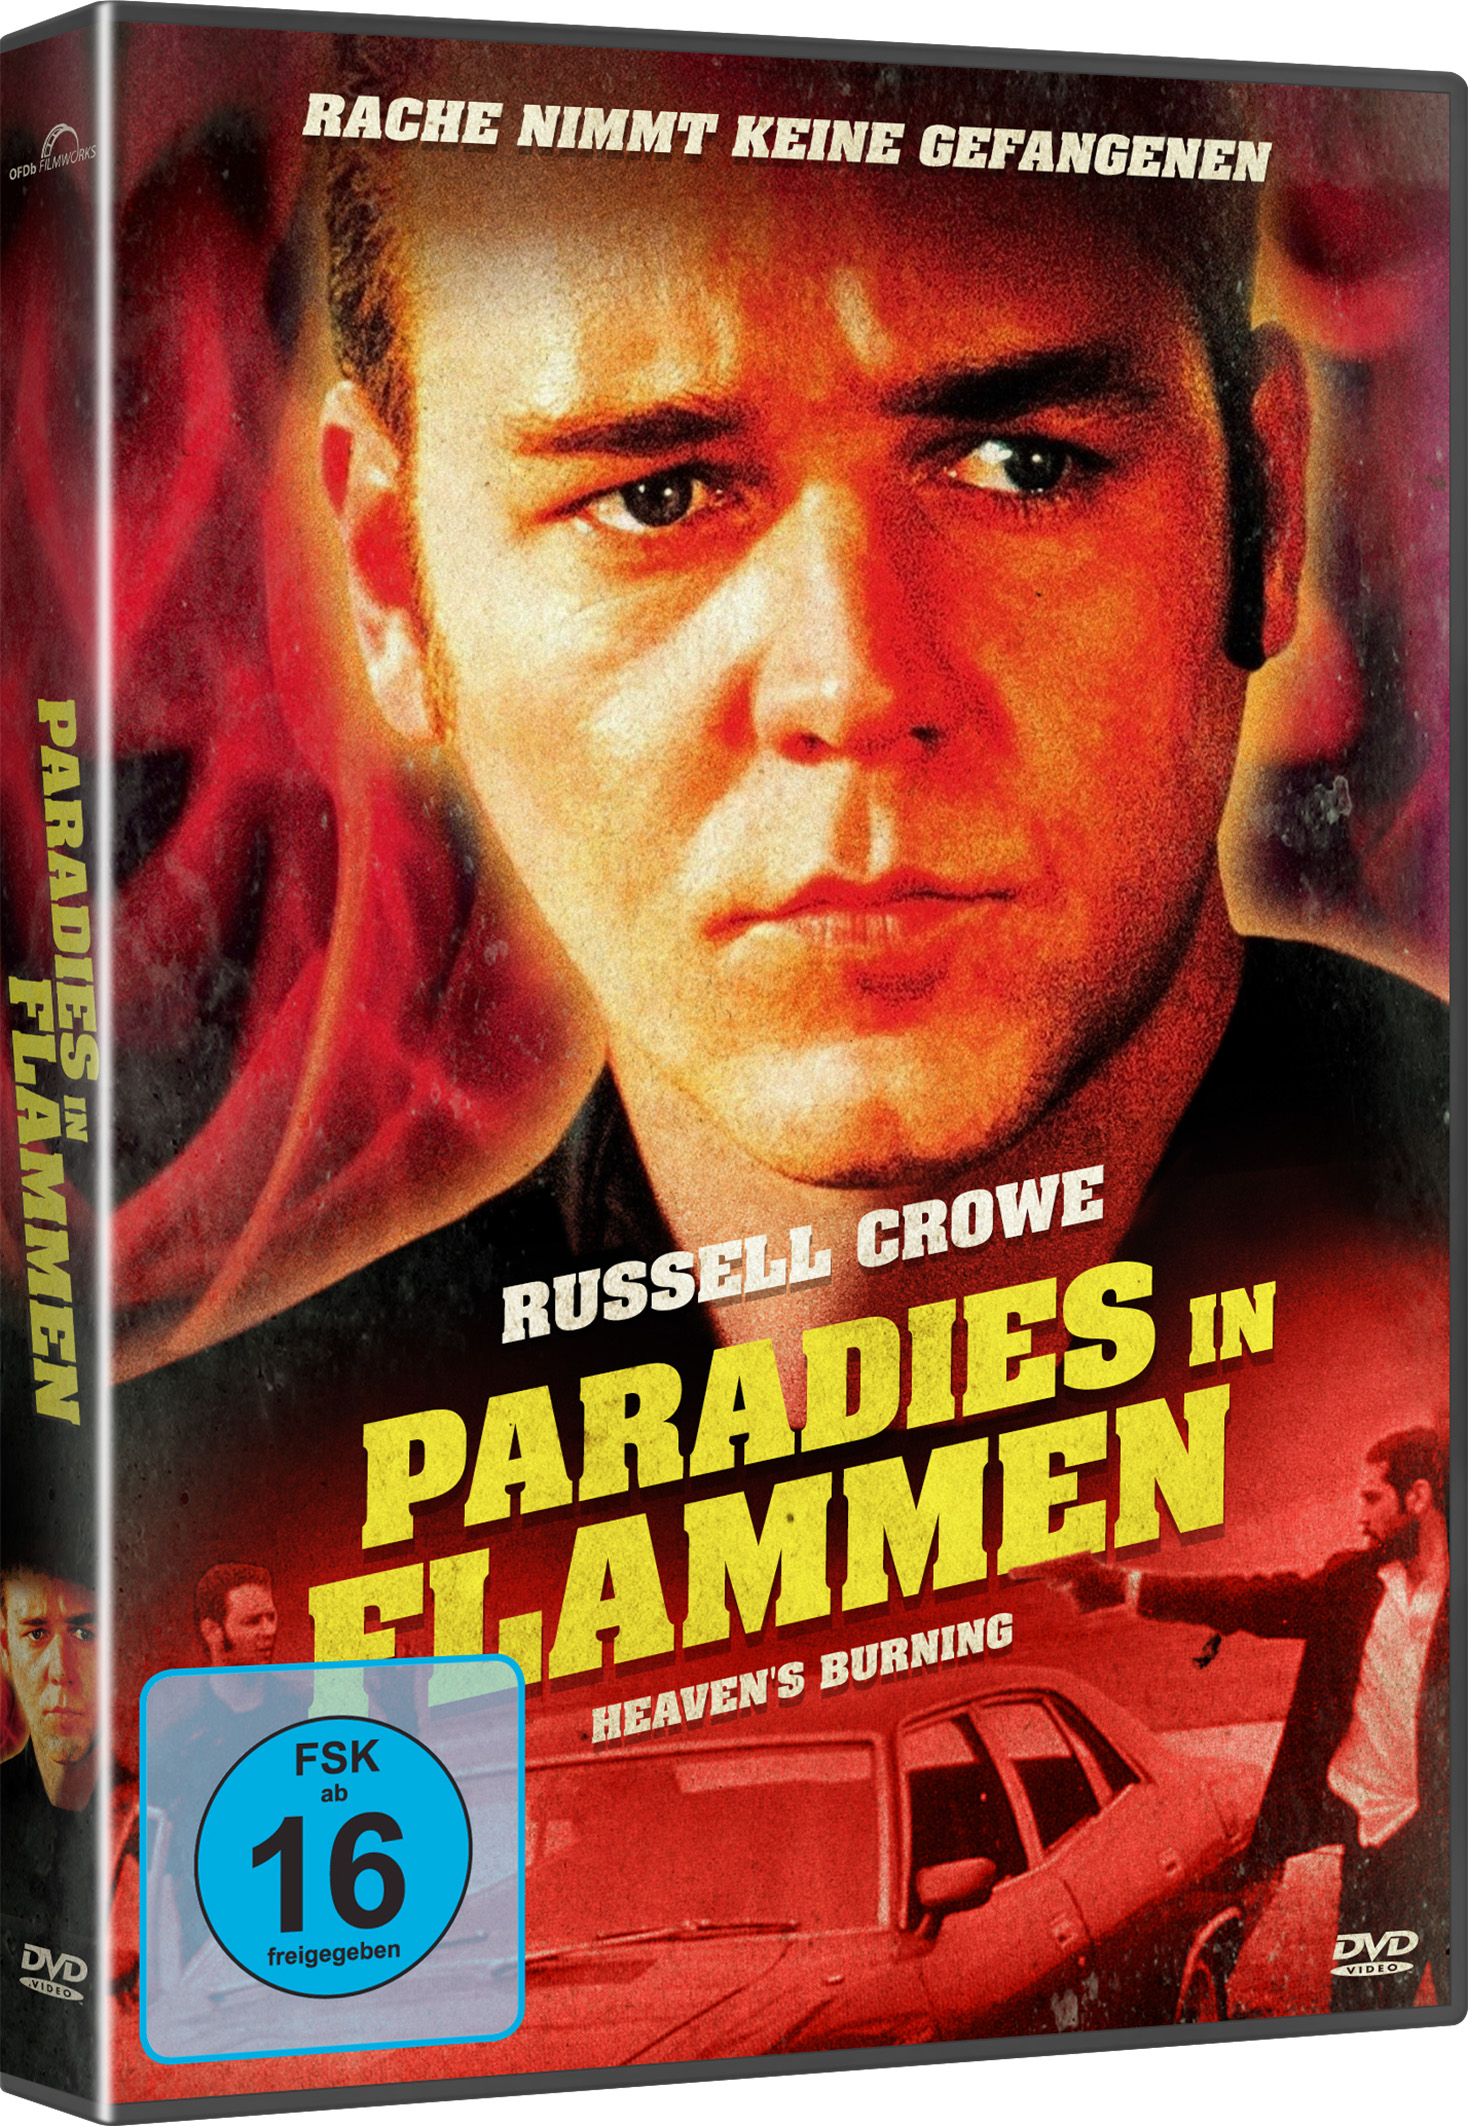 Paradies in Flammen (DVD) Image 2